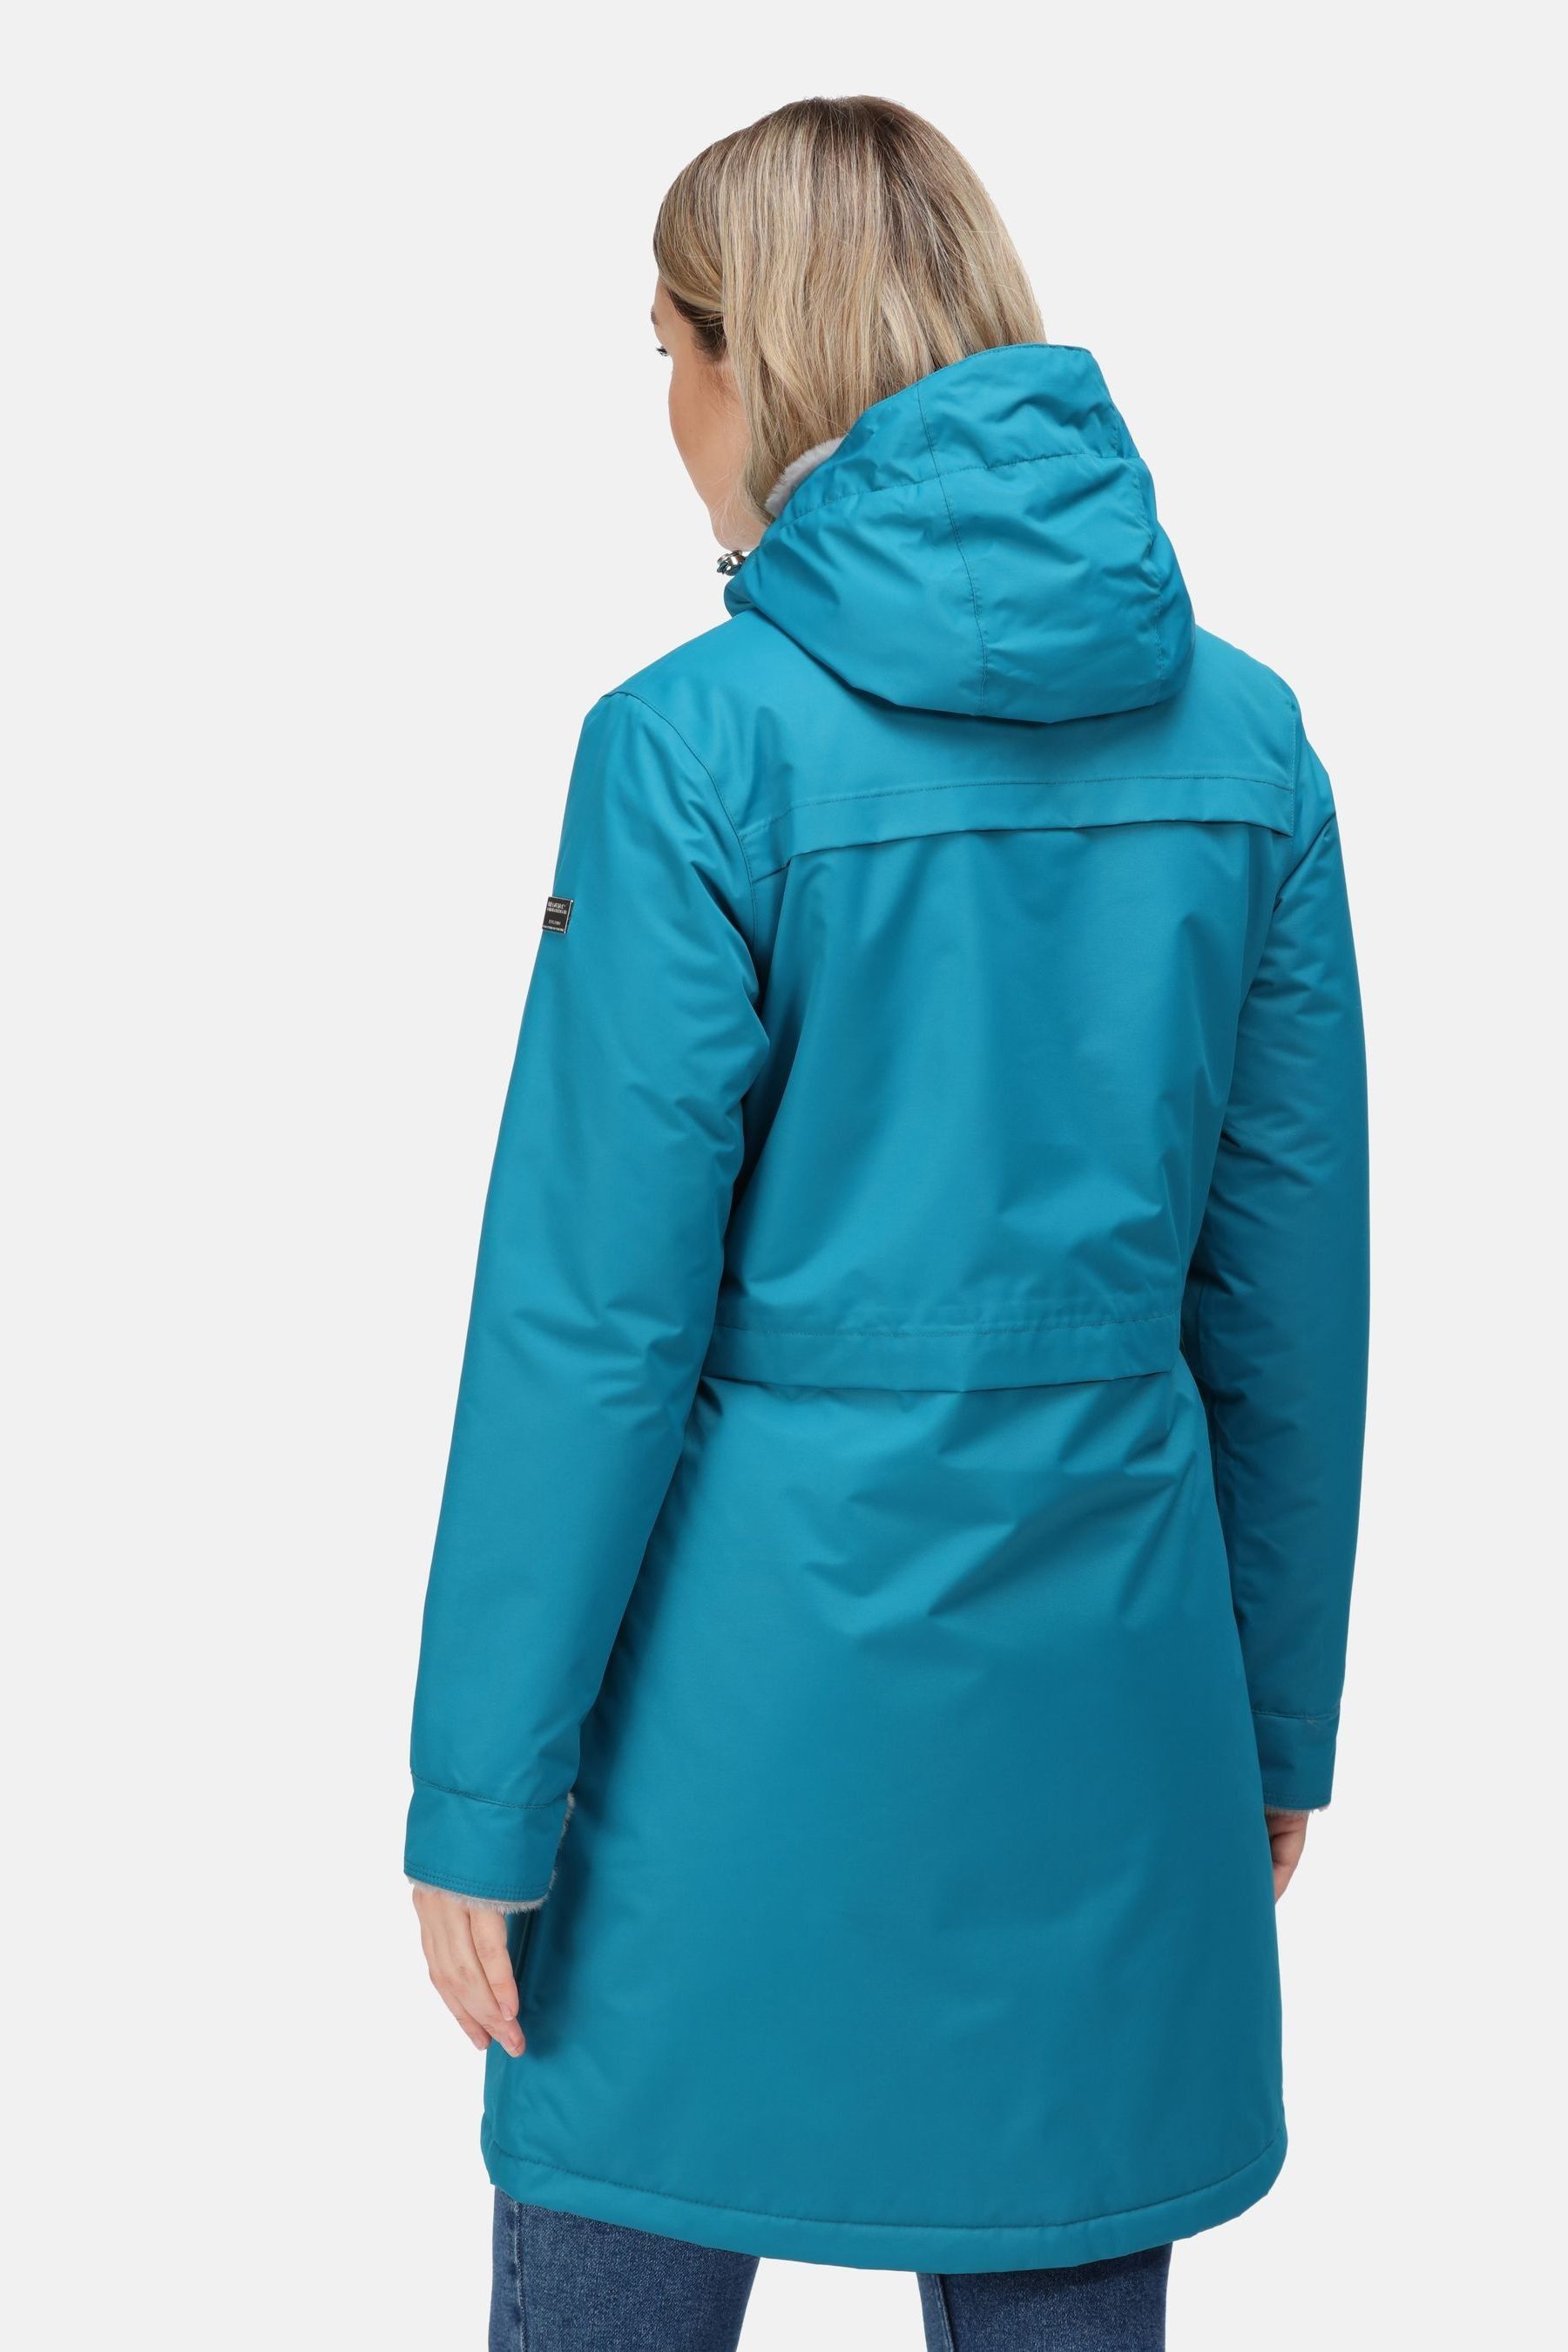 Buy Regatta Remina Waterproof Jacket from Next Ireland